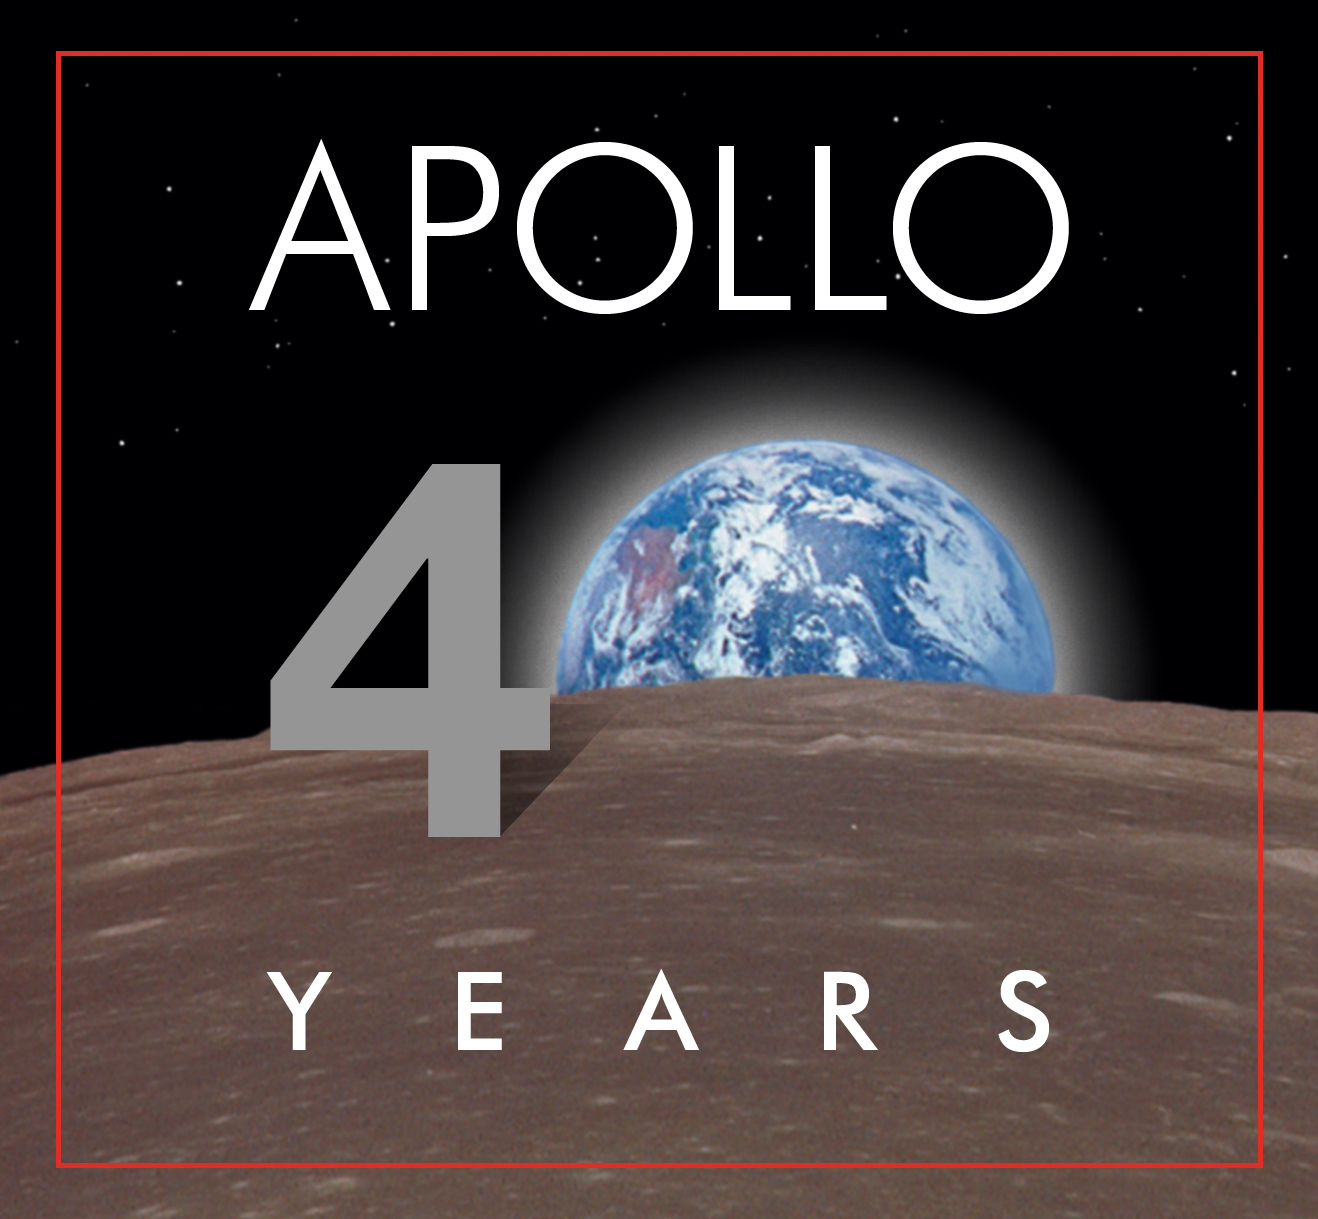 Apollo 40th Anniversary: Kennedy Space Center July 16, 2009